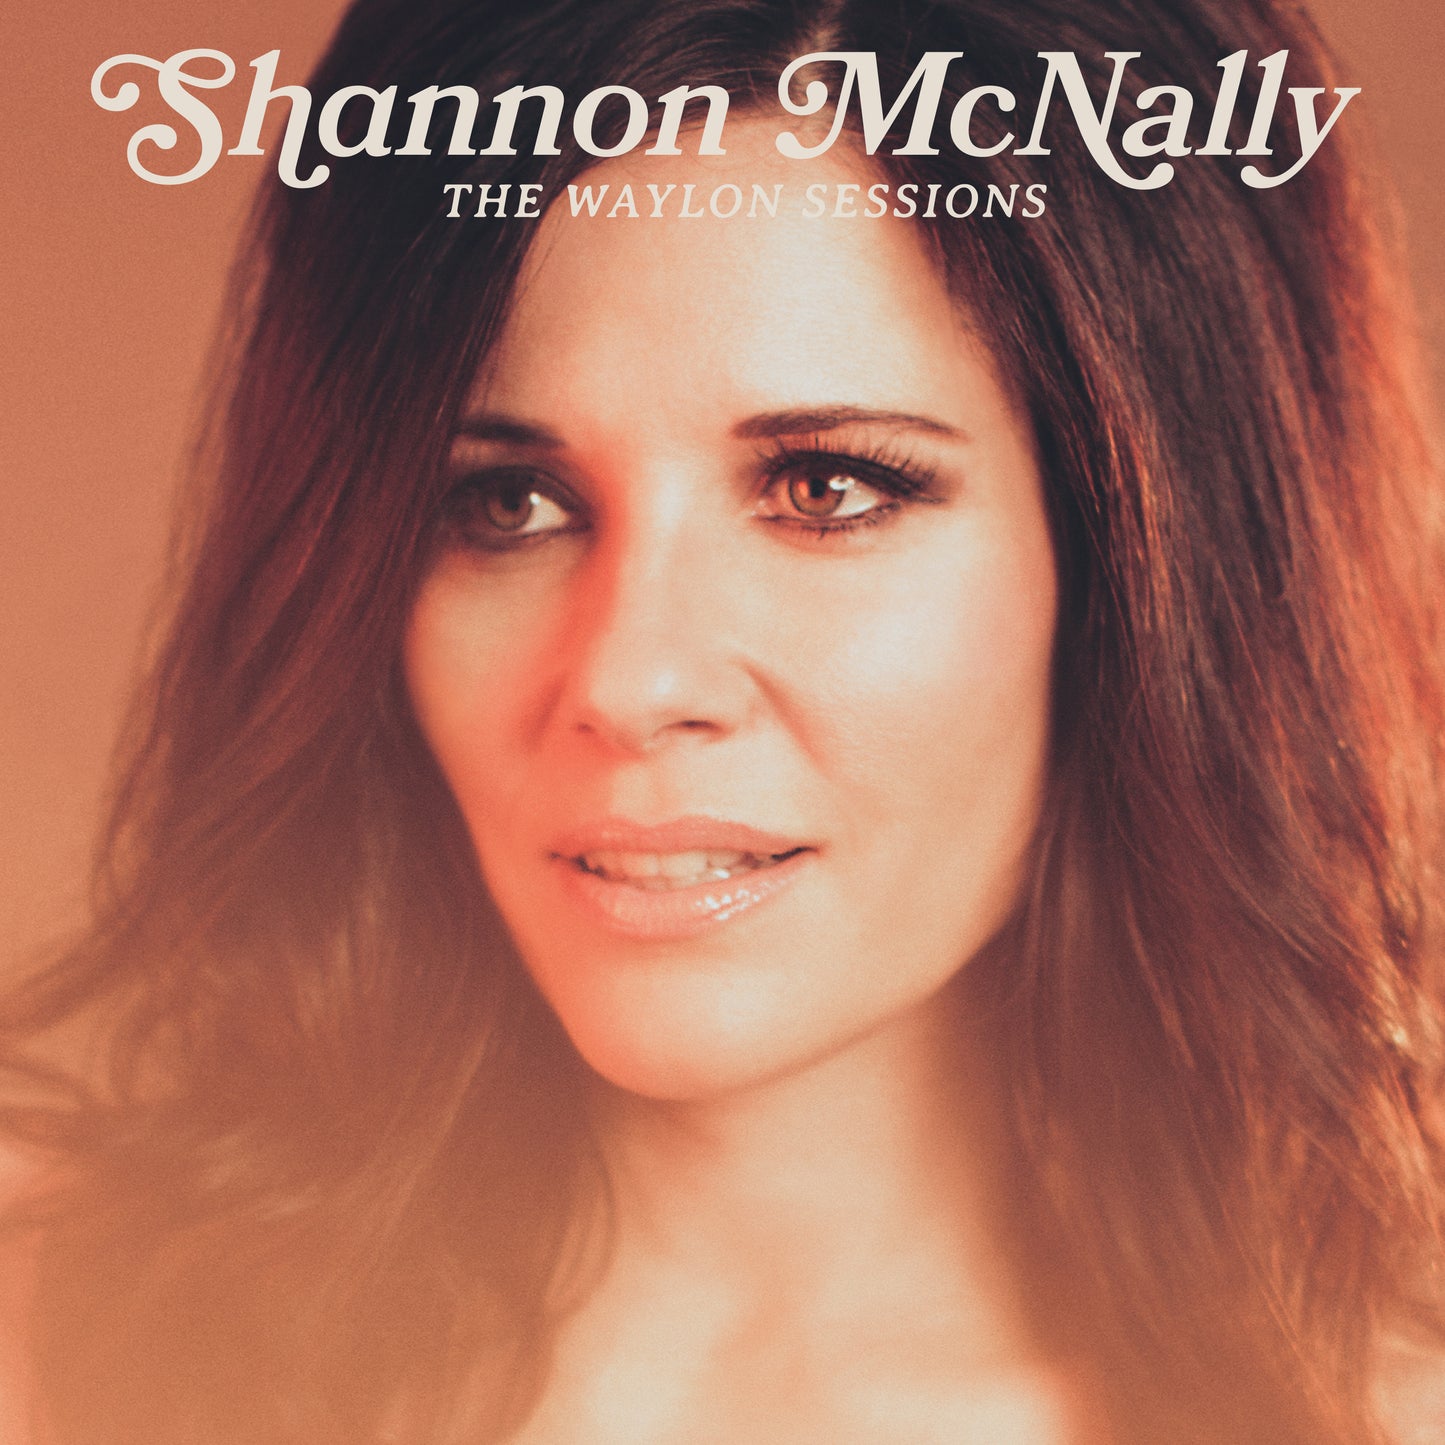 Shannon McNally - "The Waylon Sessions" CD